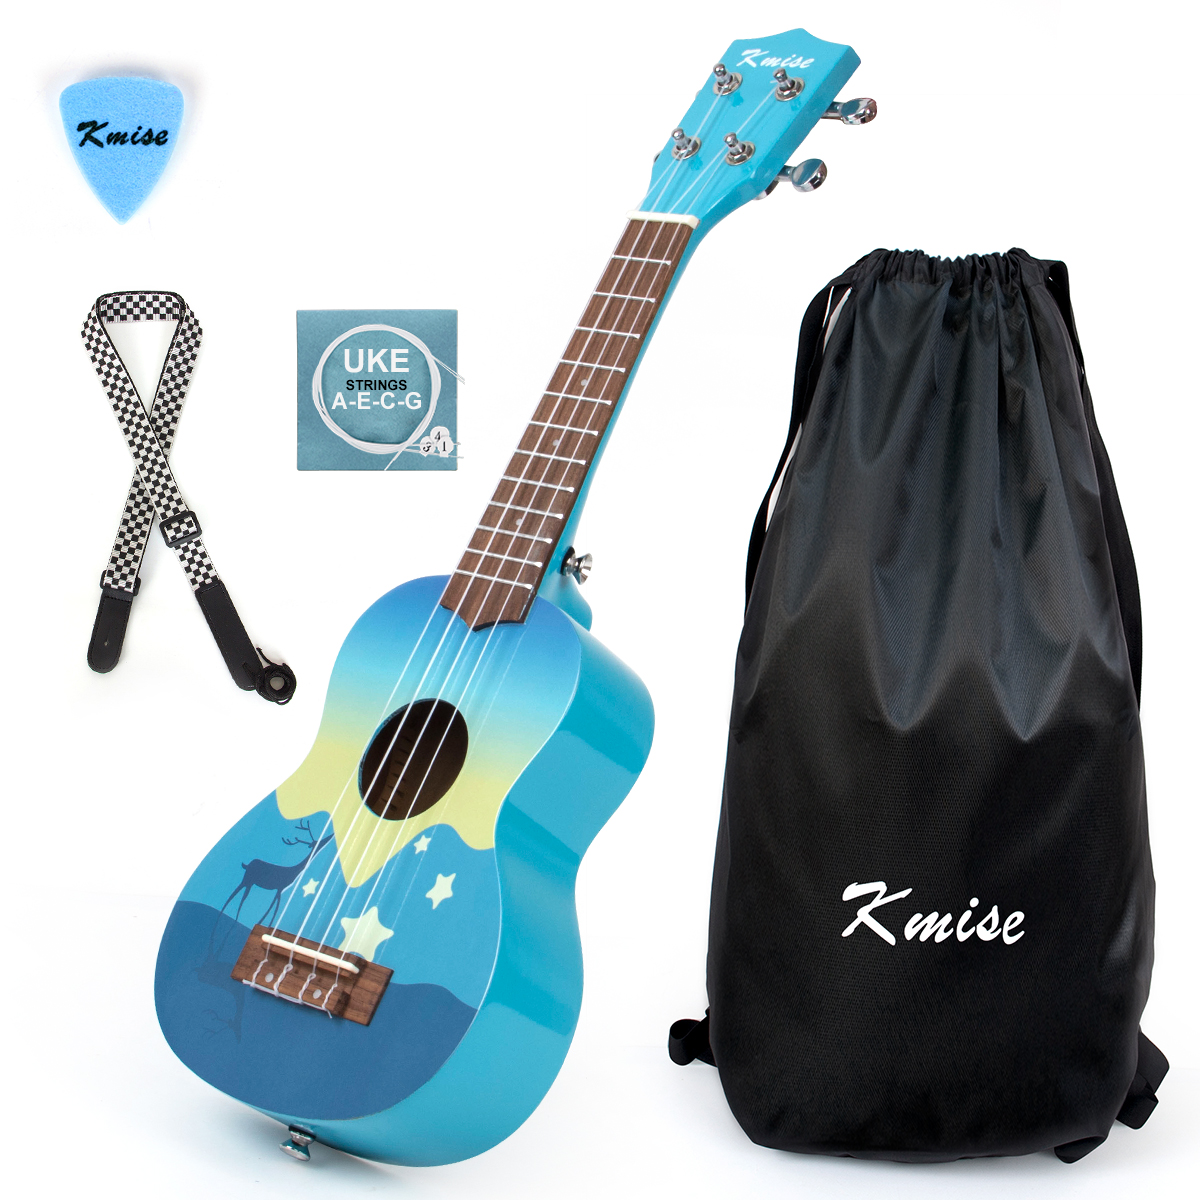 Kmise Soprano Ukulele 21 inch Instrument Gift for Kids Children with Carry Bag String (Blue)